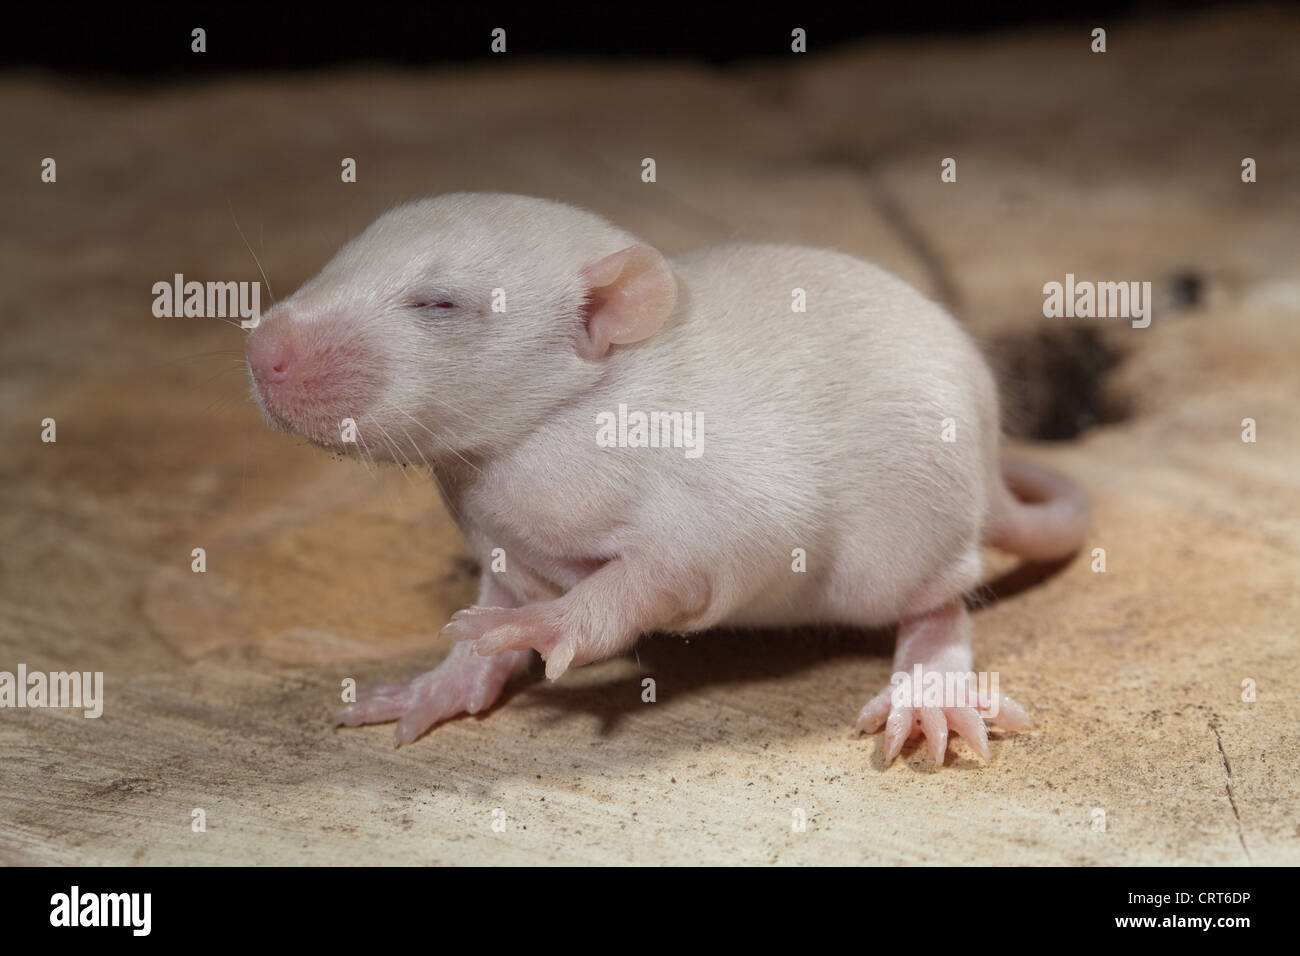 Domesticated White Rat (Rattus norvegicus). 12 days old baby, 'pup' rat. Albino, showing pink eyes beginning to open. Stock Photo